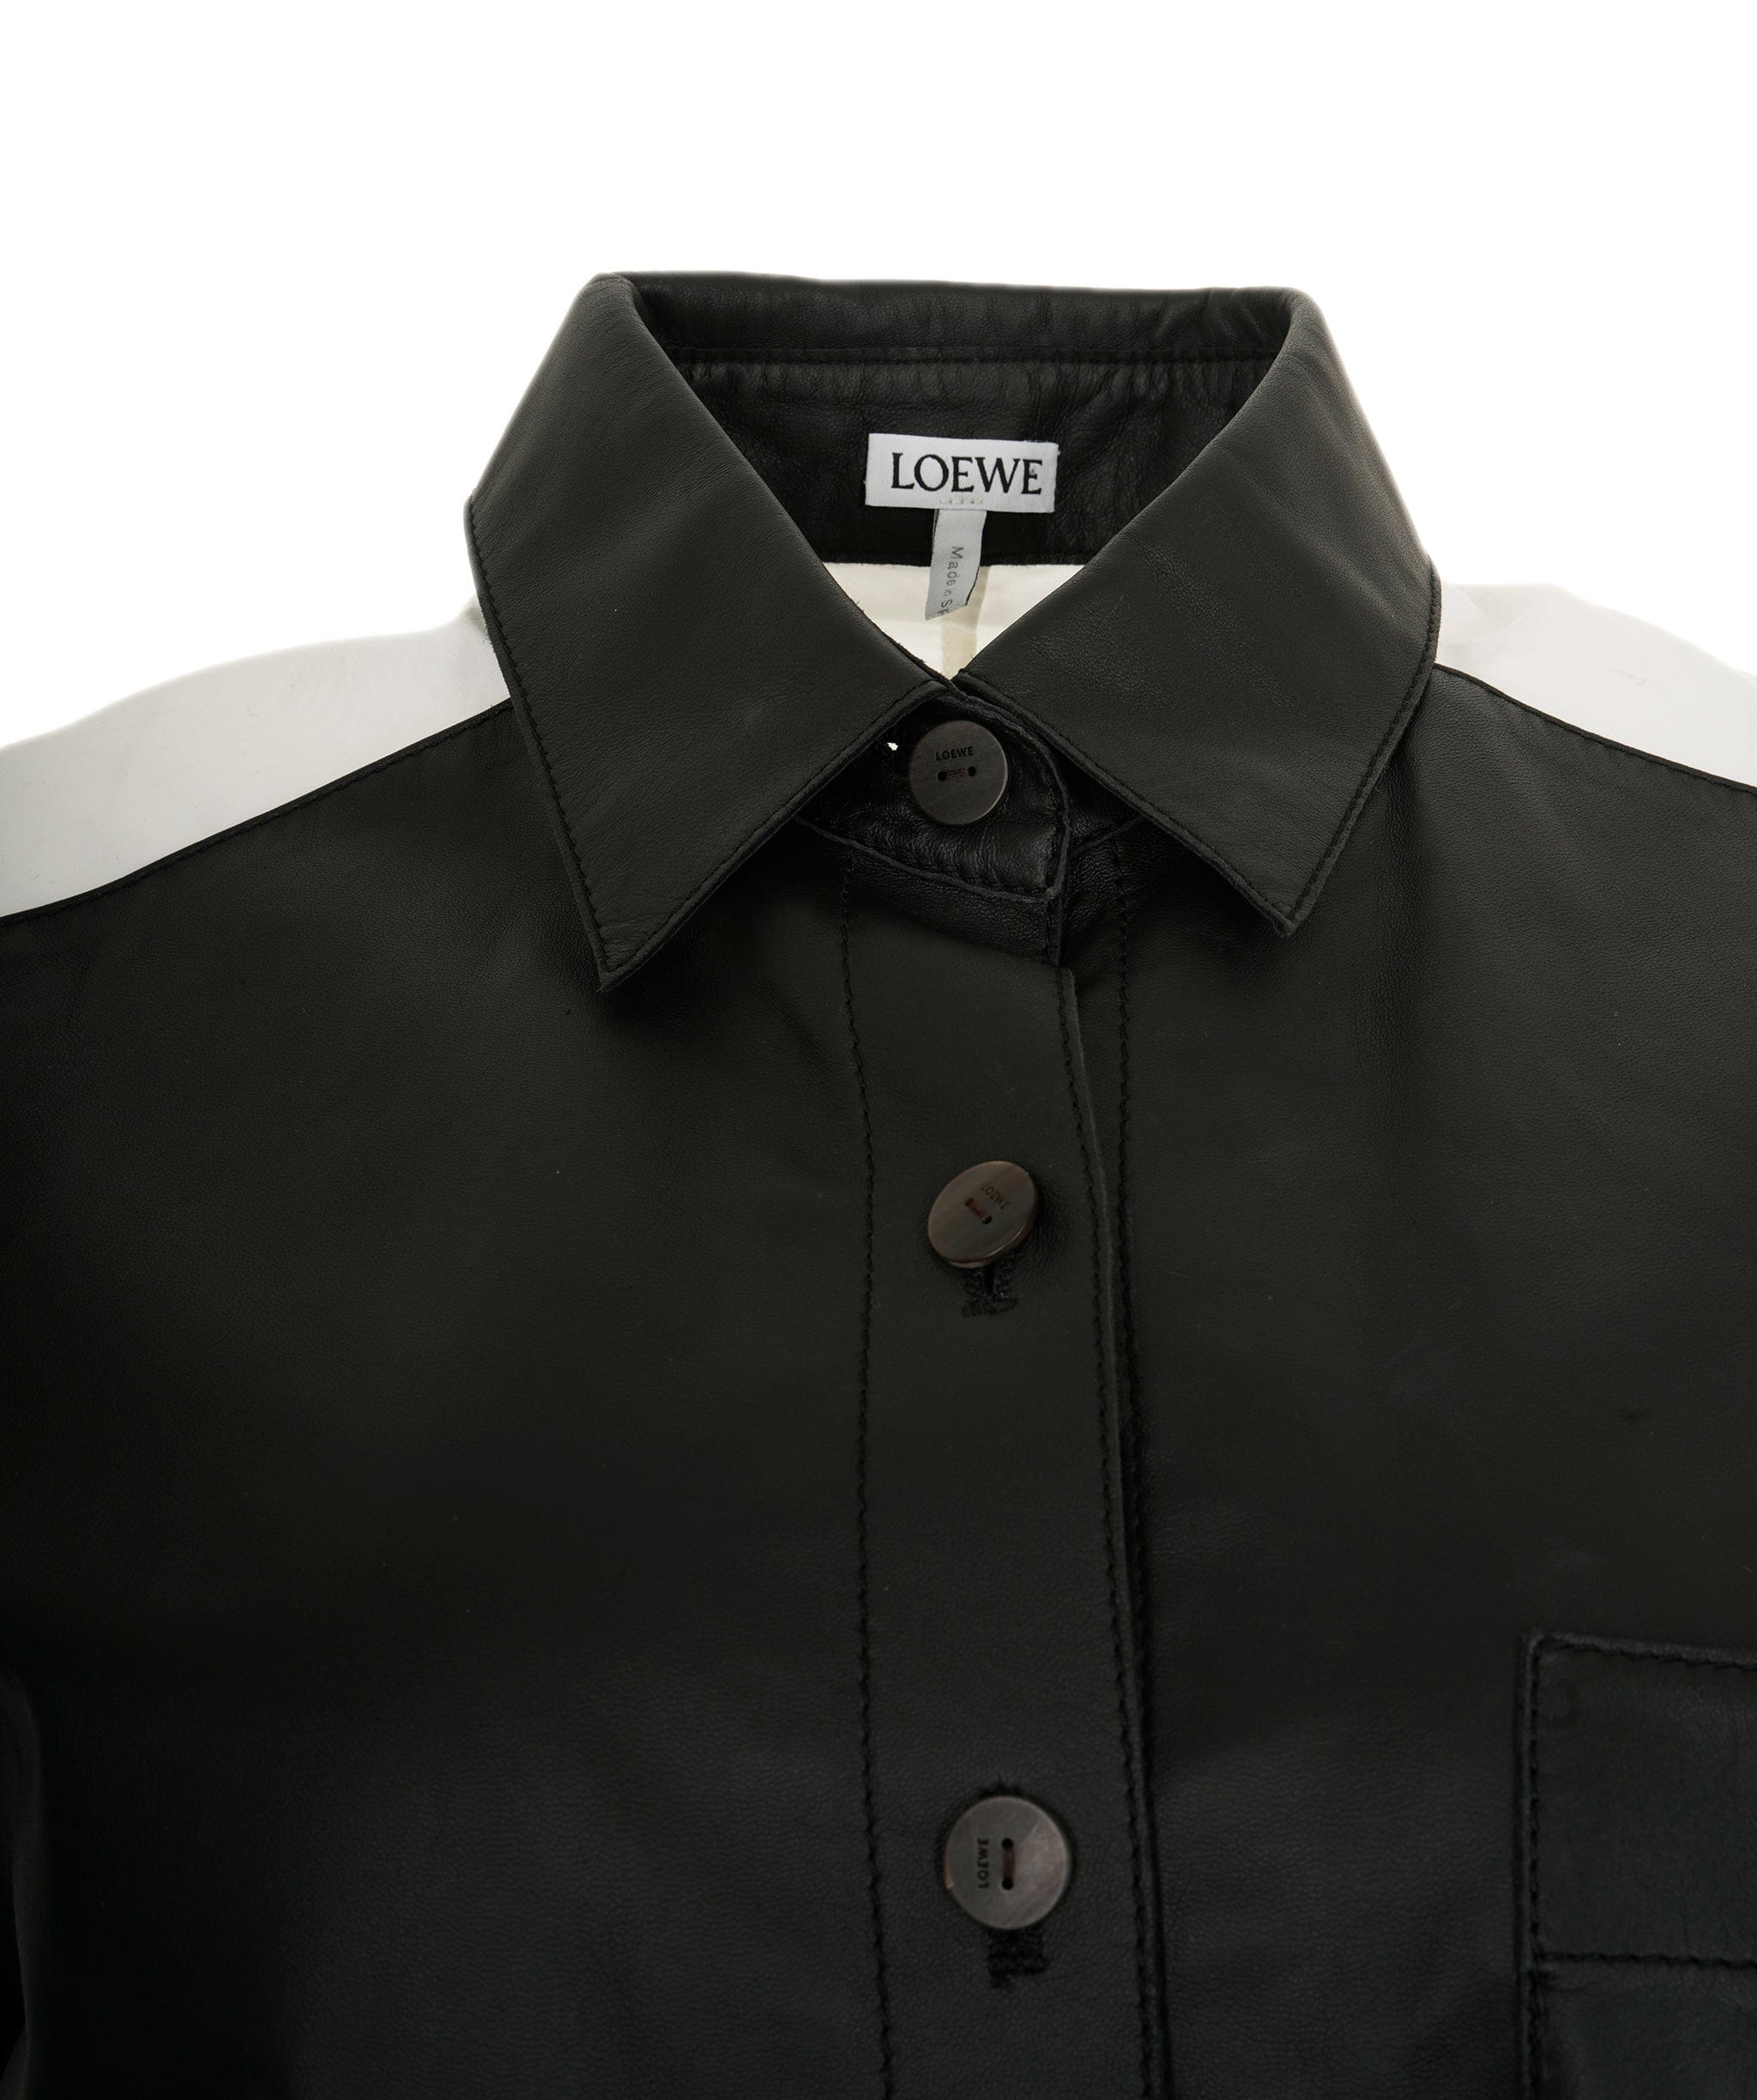 Loewe Loewe bi black & white leather shirt - AJC0418